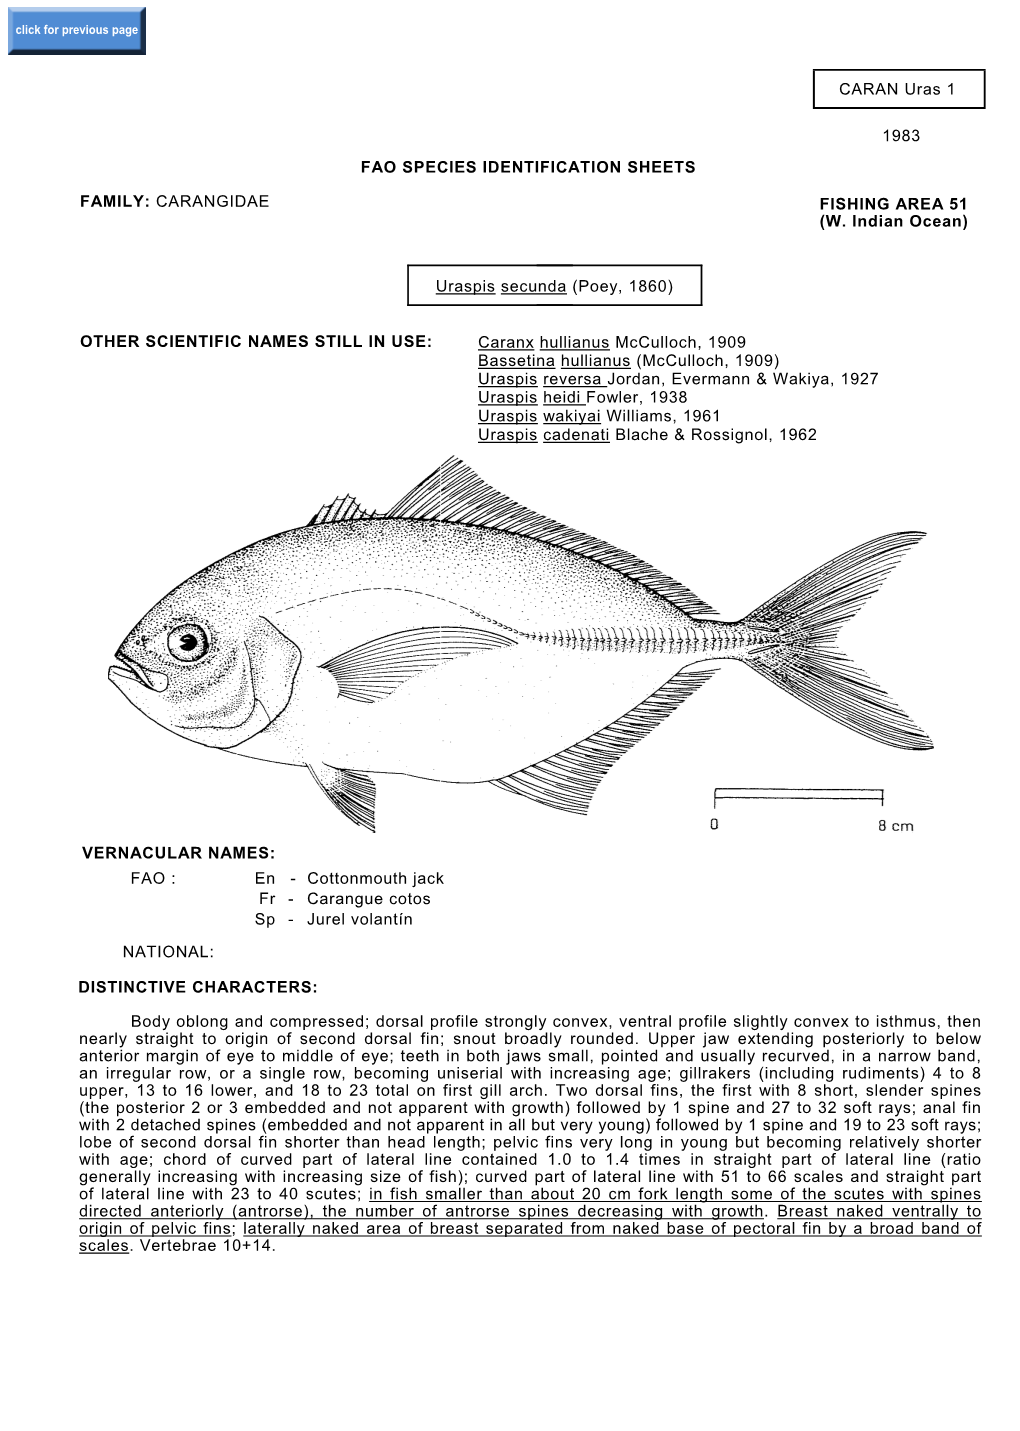 CARAN Uras 1 1983 FAO SPECIES IDENTIFICATION SHEETS FAMILY: CARANGIDAE FISHING AREA 51 (W. Indian Ocean) Uraspis Secunda (Poey